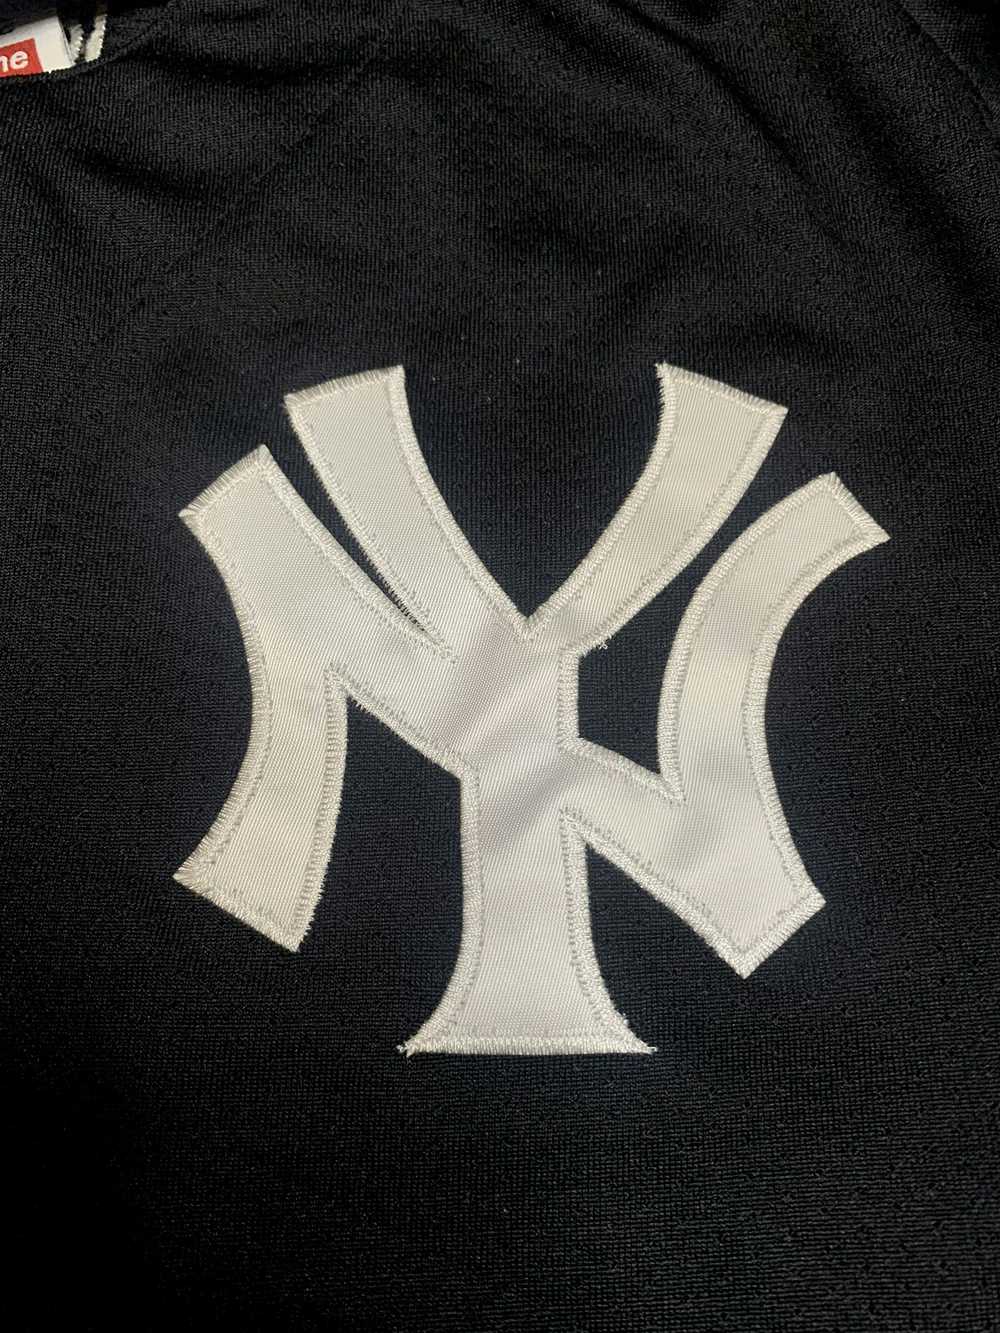 Supreme Supreme SS15 NY Yankees Jersey - image 9